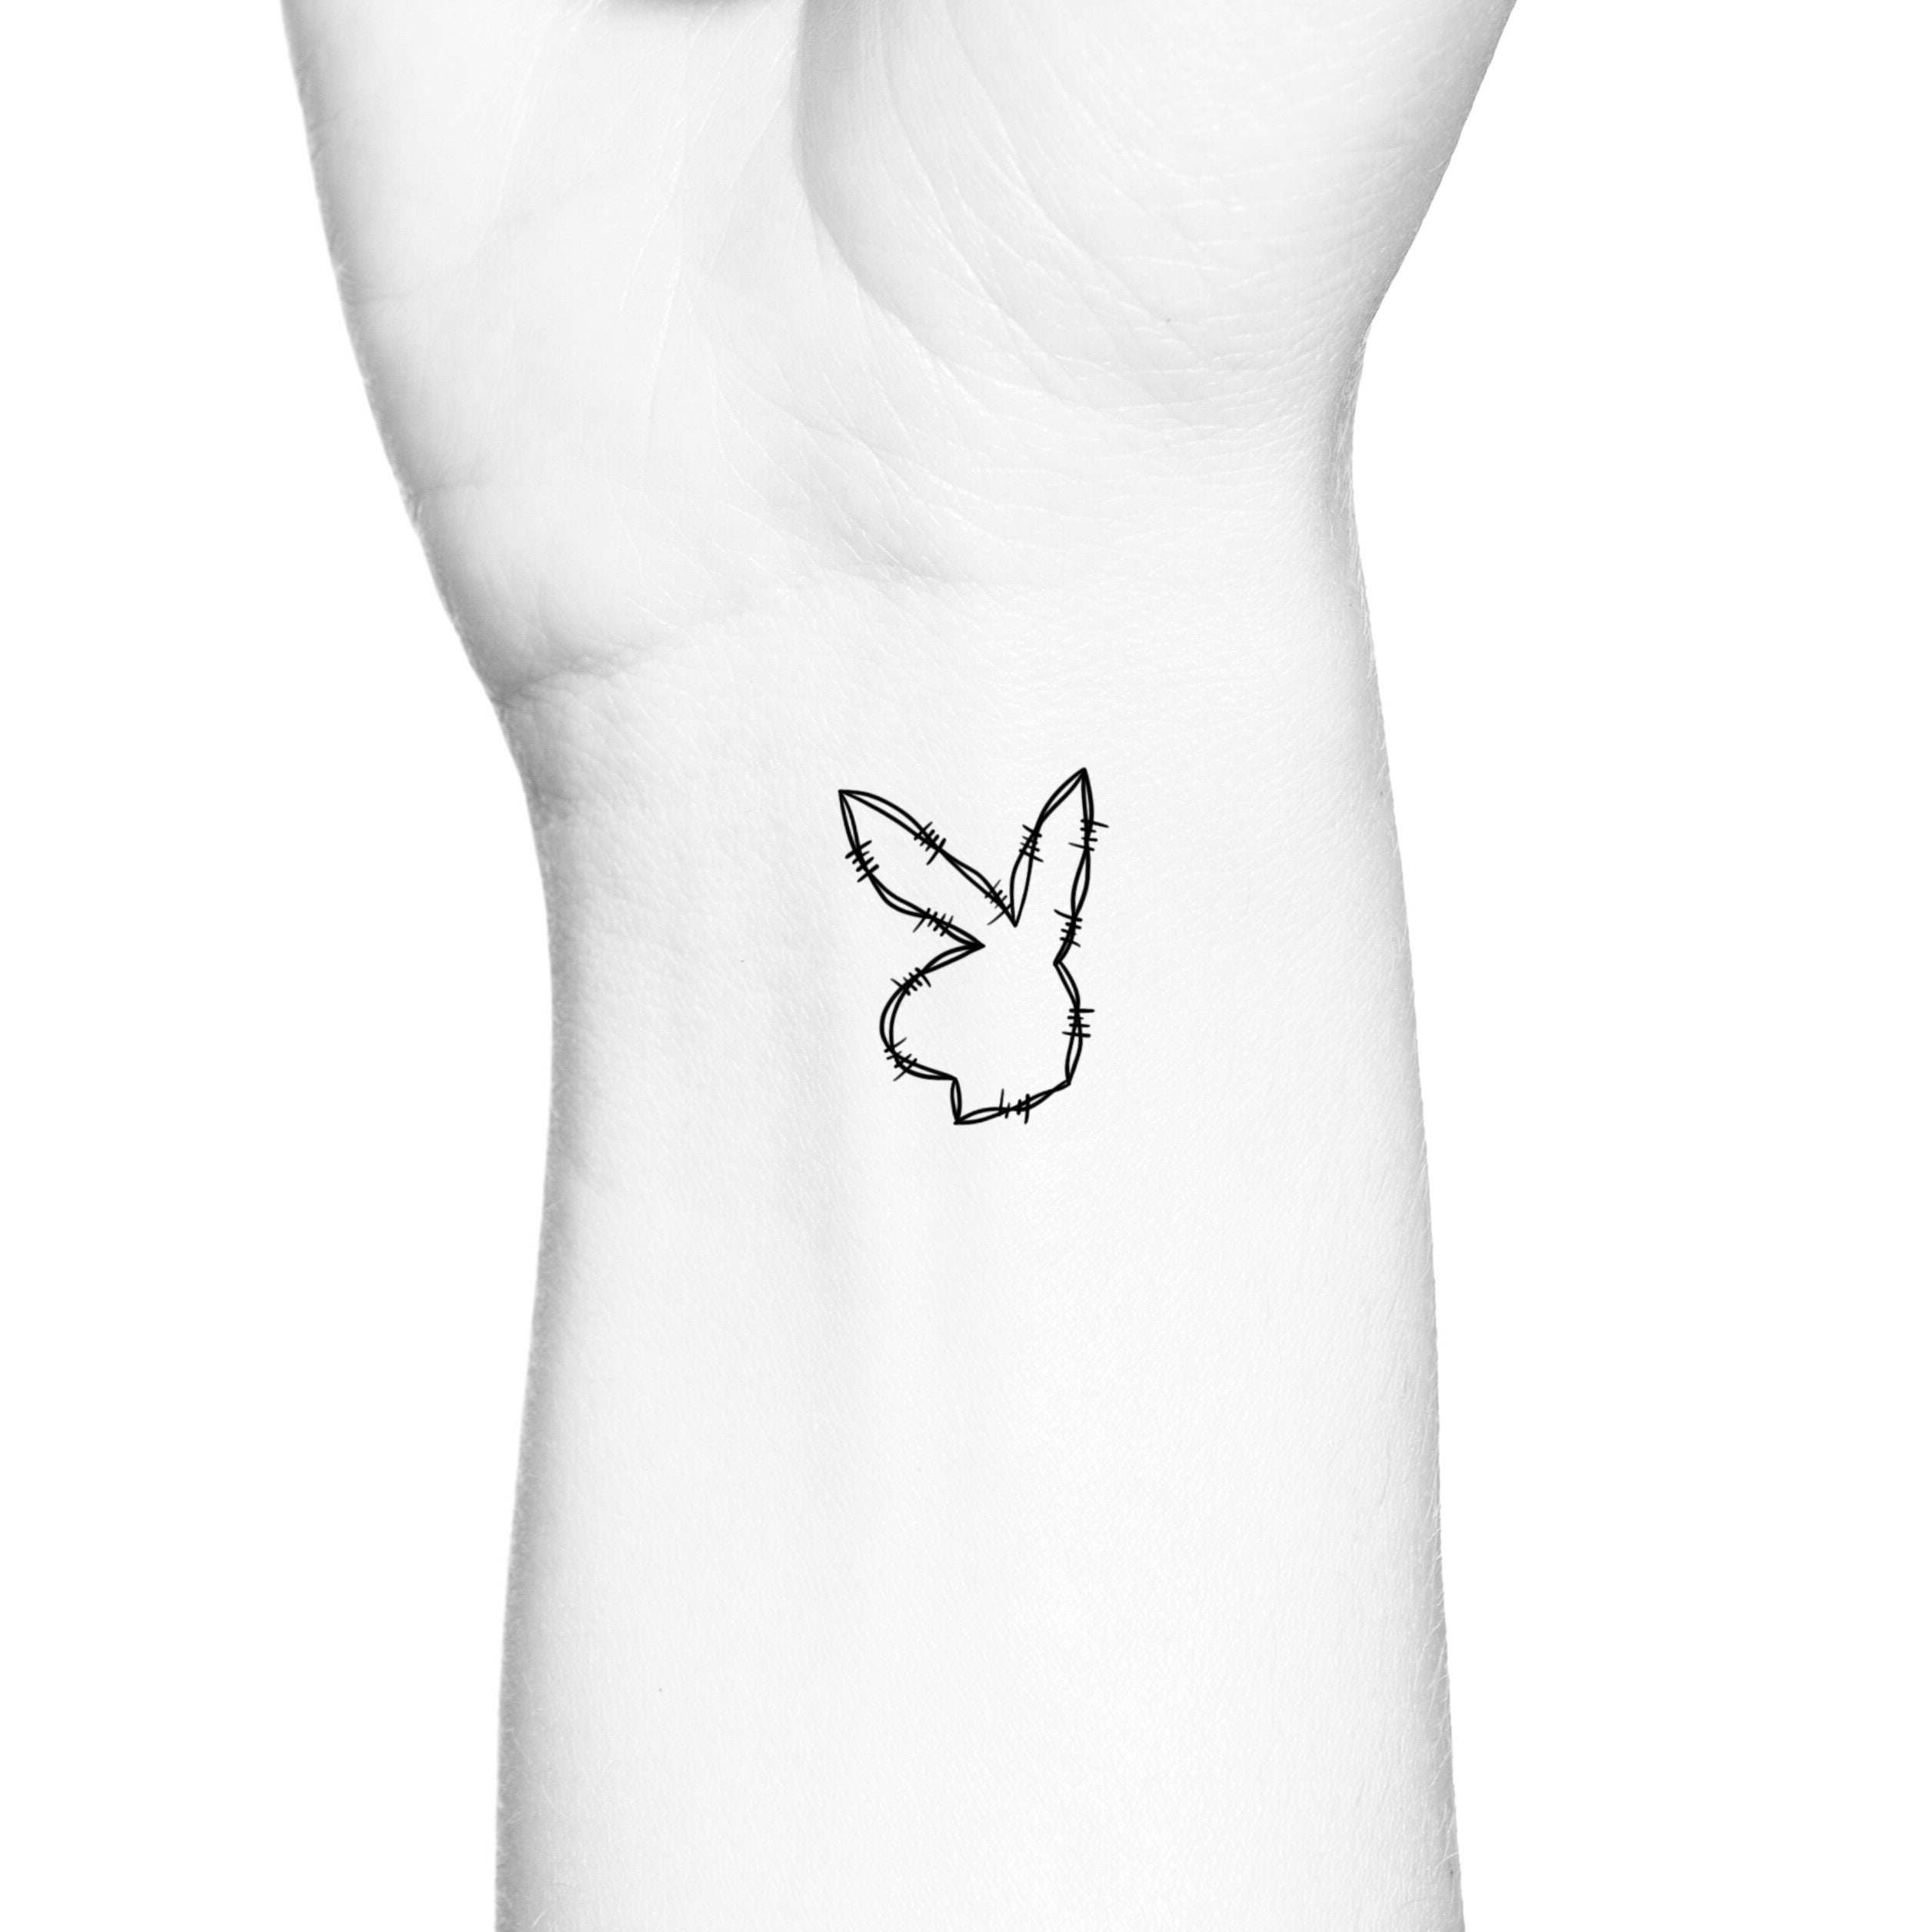 Prisoner Tattoos Temporary Face Tattoos Neck Hands Arm Playboy Bunny Tattoo  F